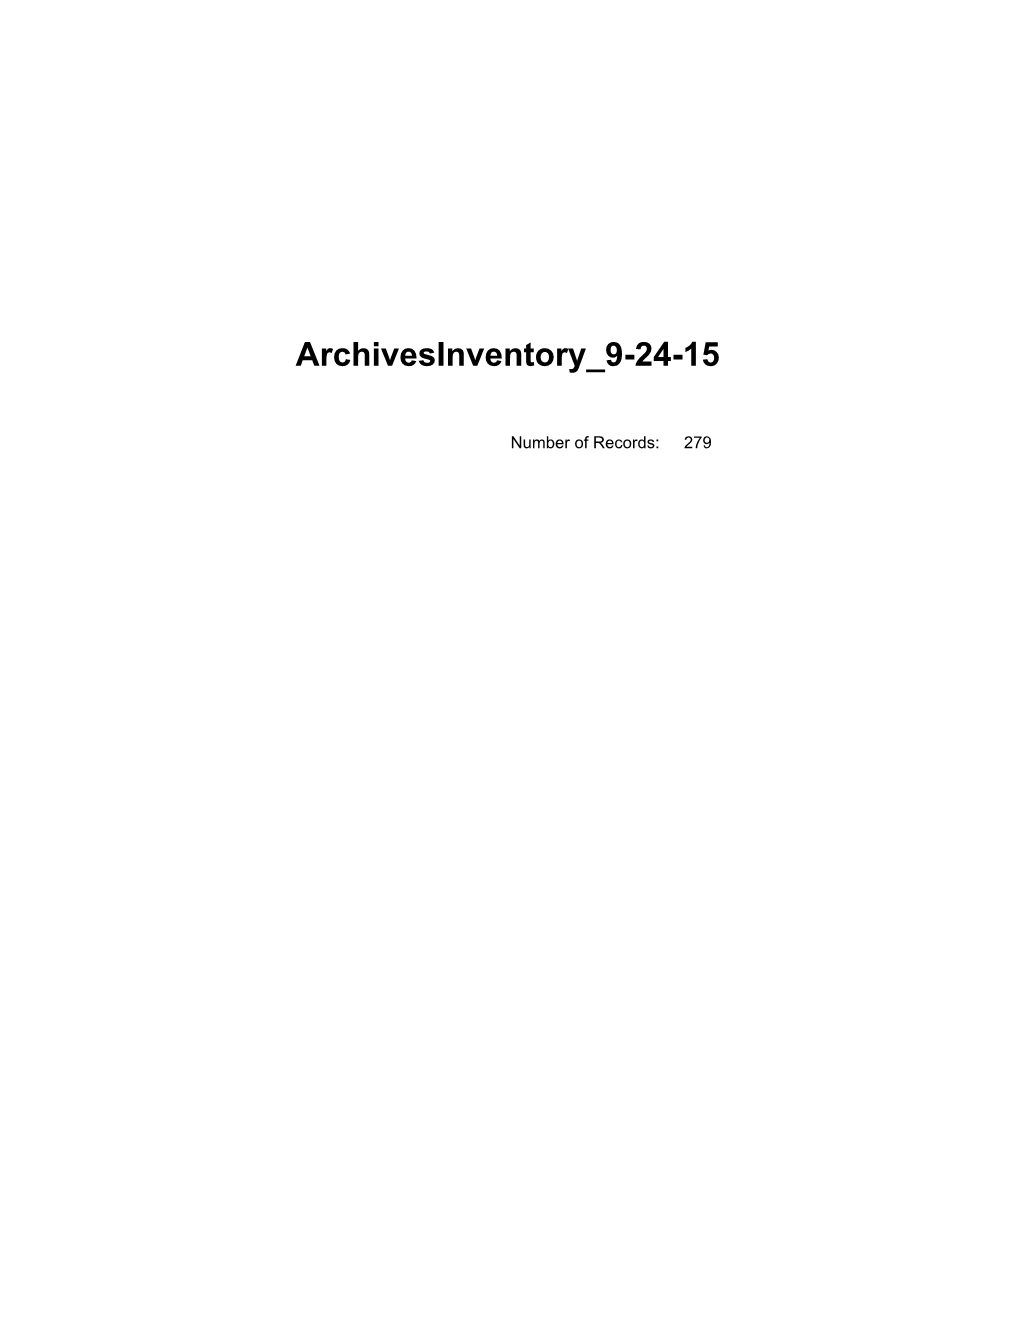 Archivesinventory 9-24-15